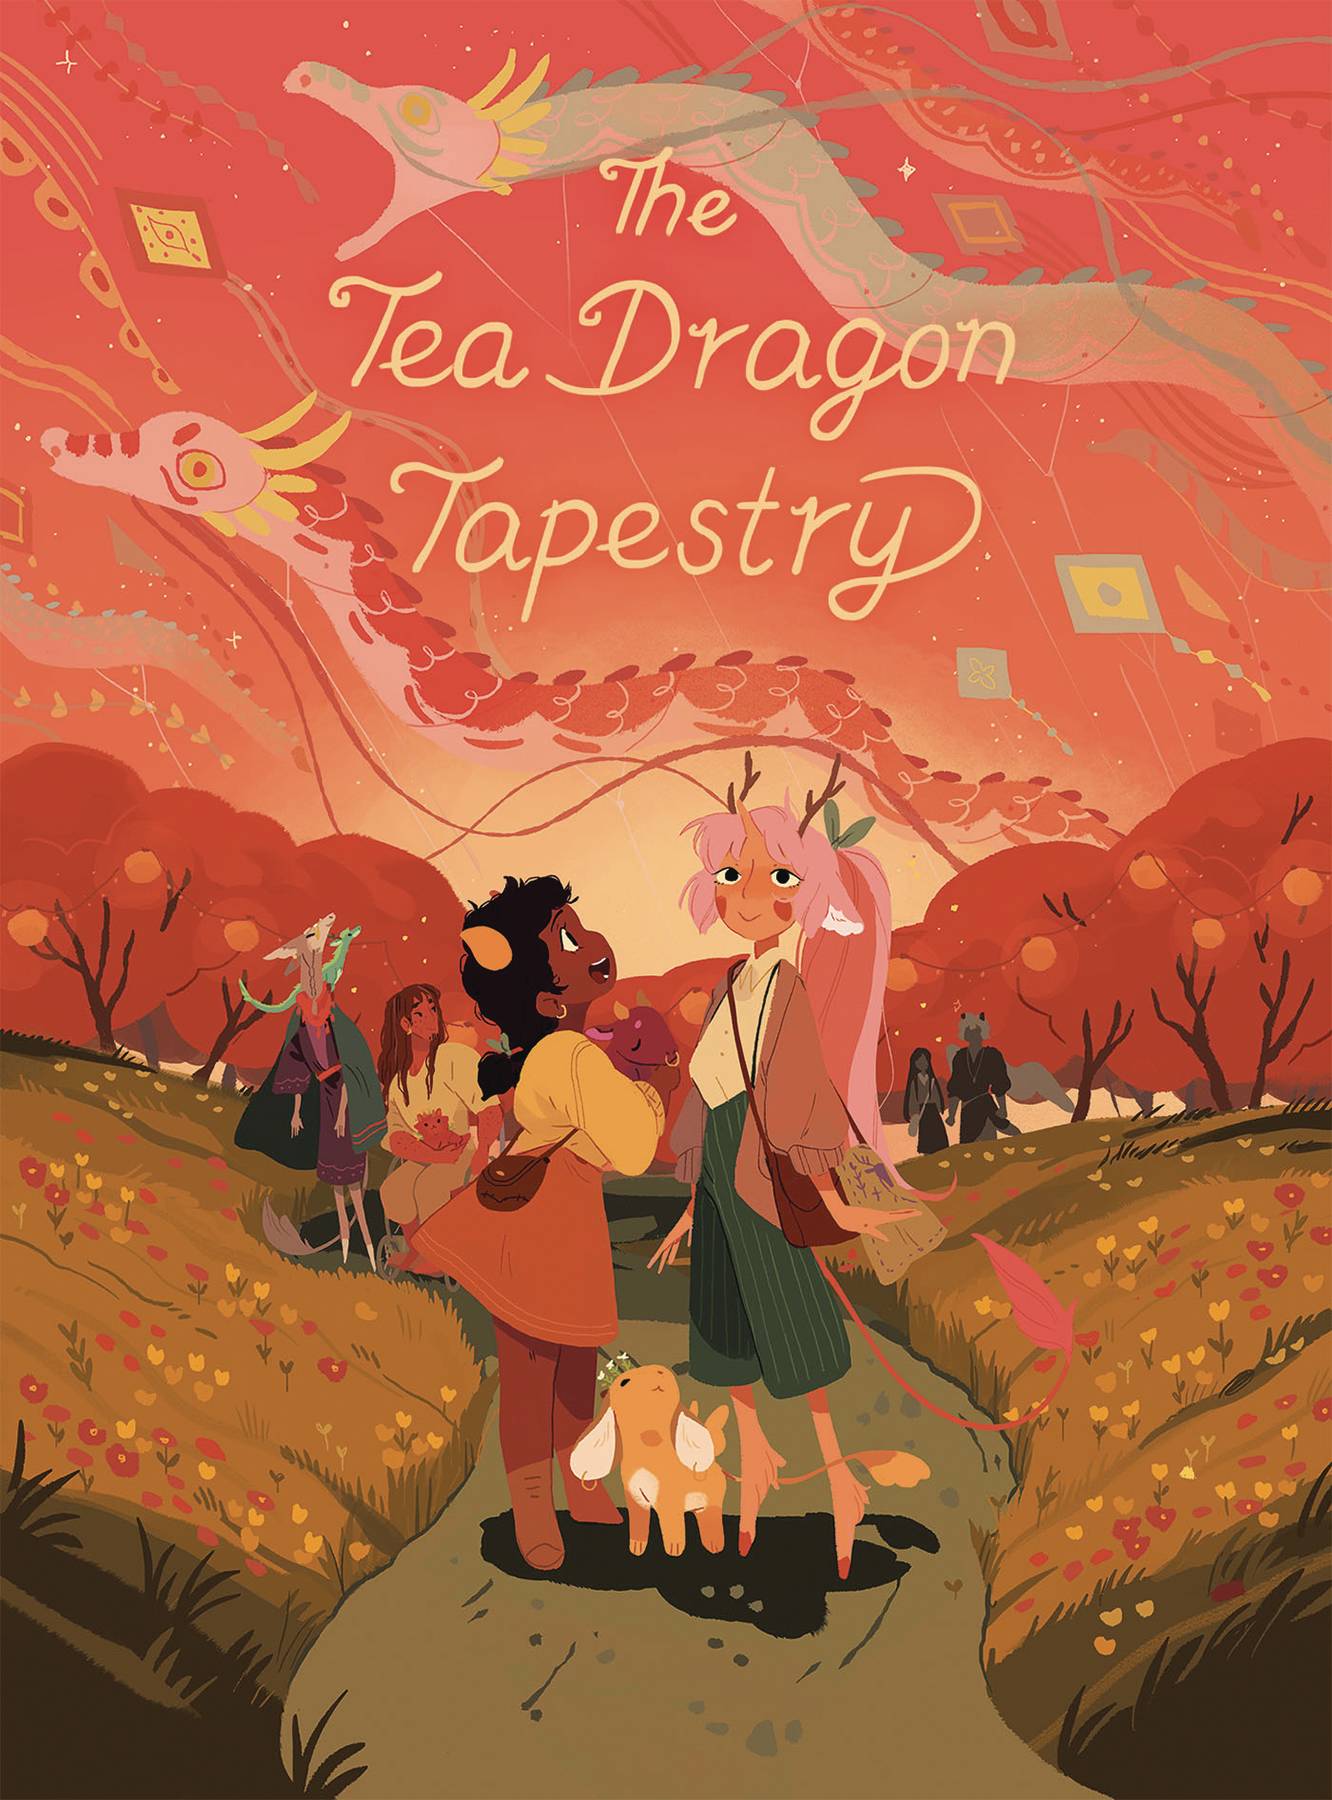 The Tea Dragon Tapestry h/c